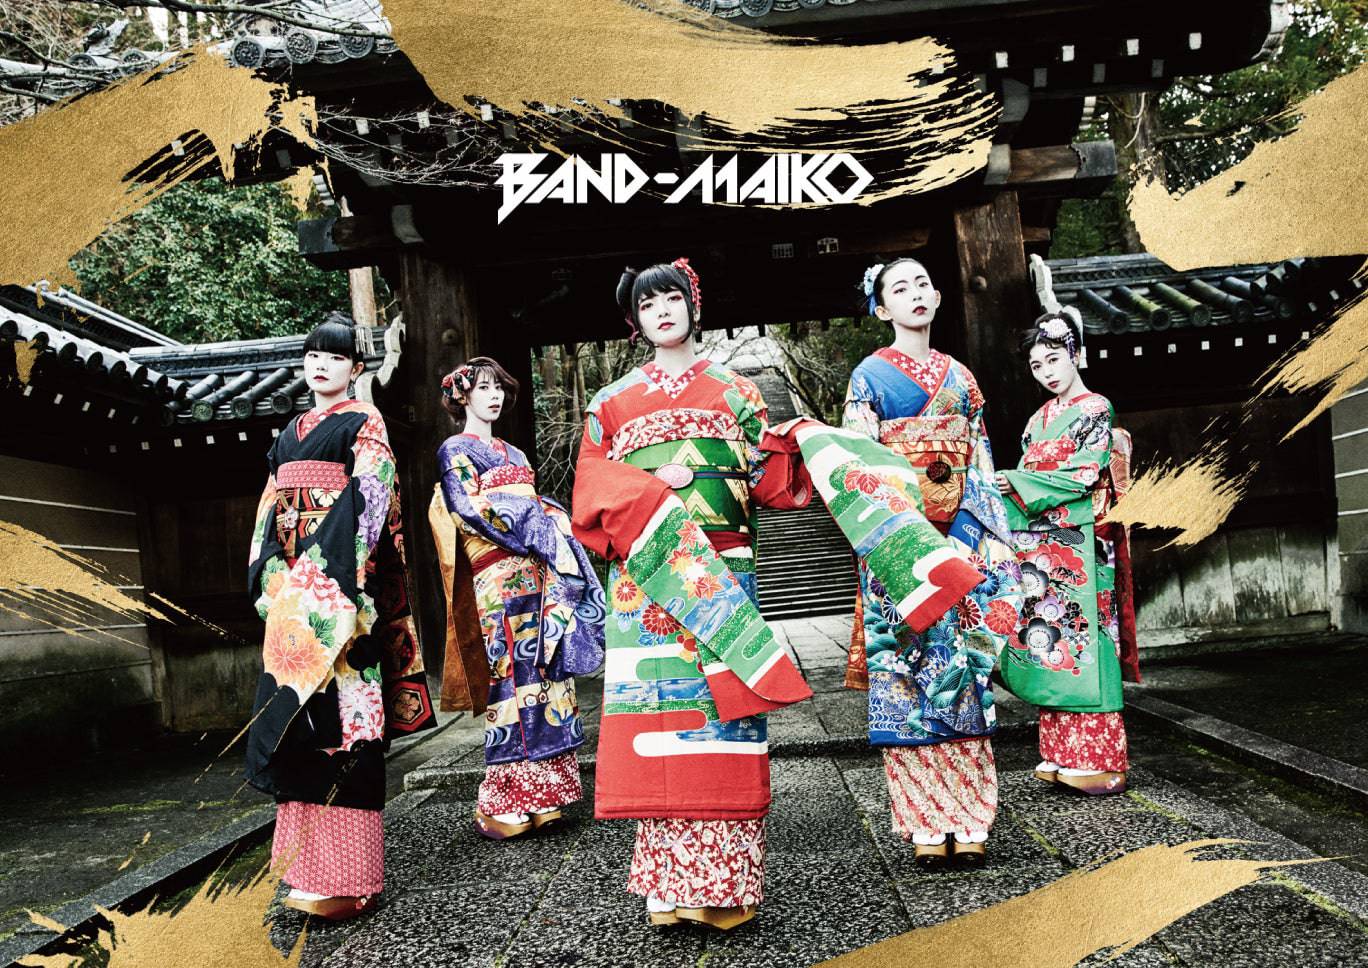 BAND-MAID BAND-MAIKO TEE - BAND-MAID Shop